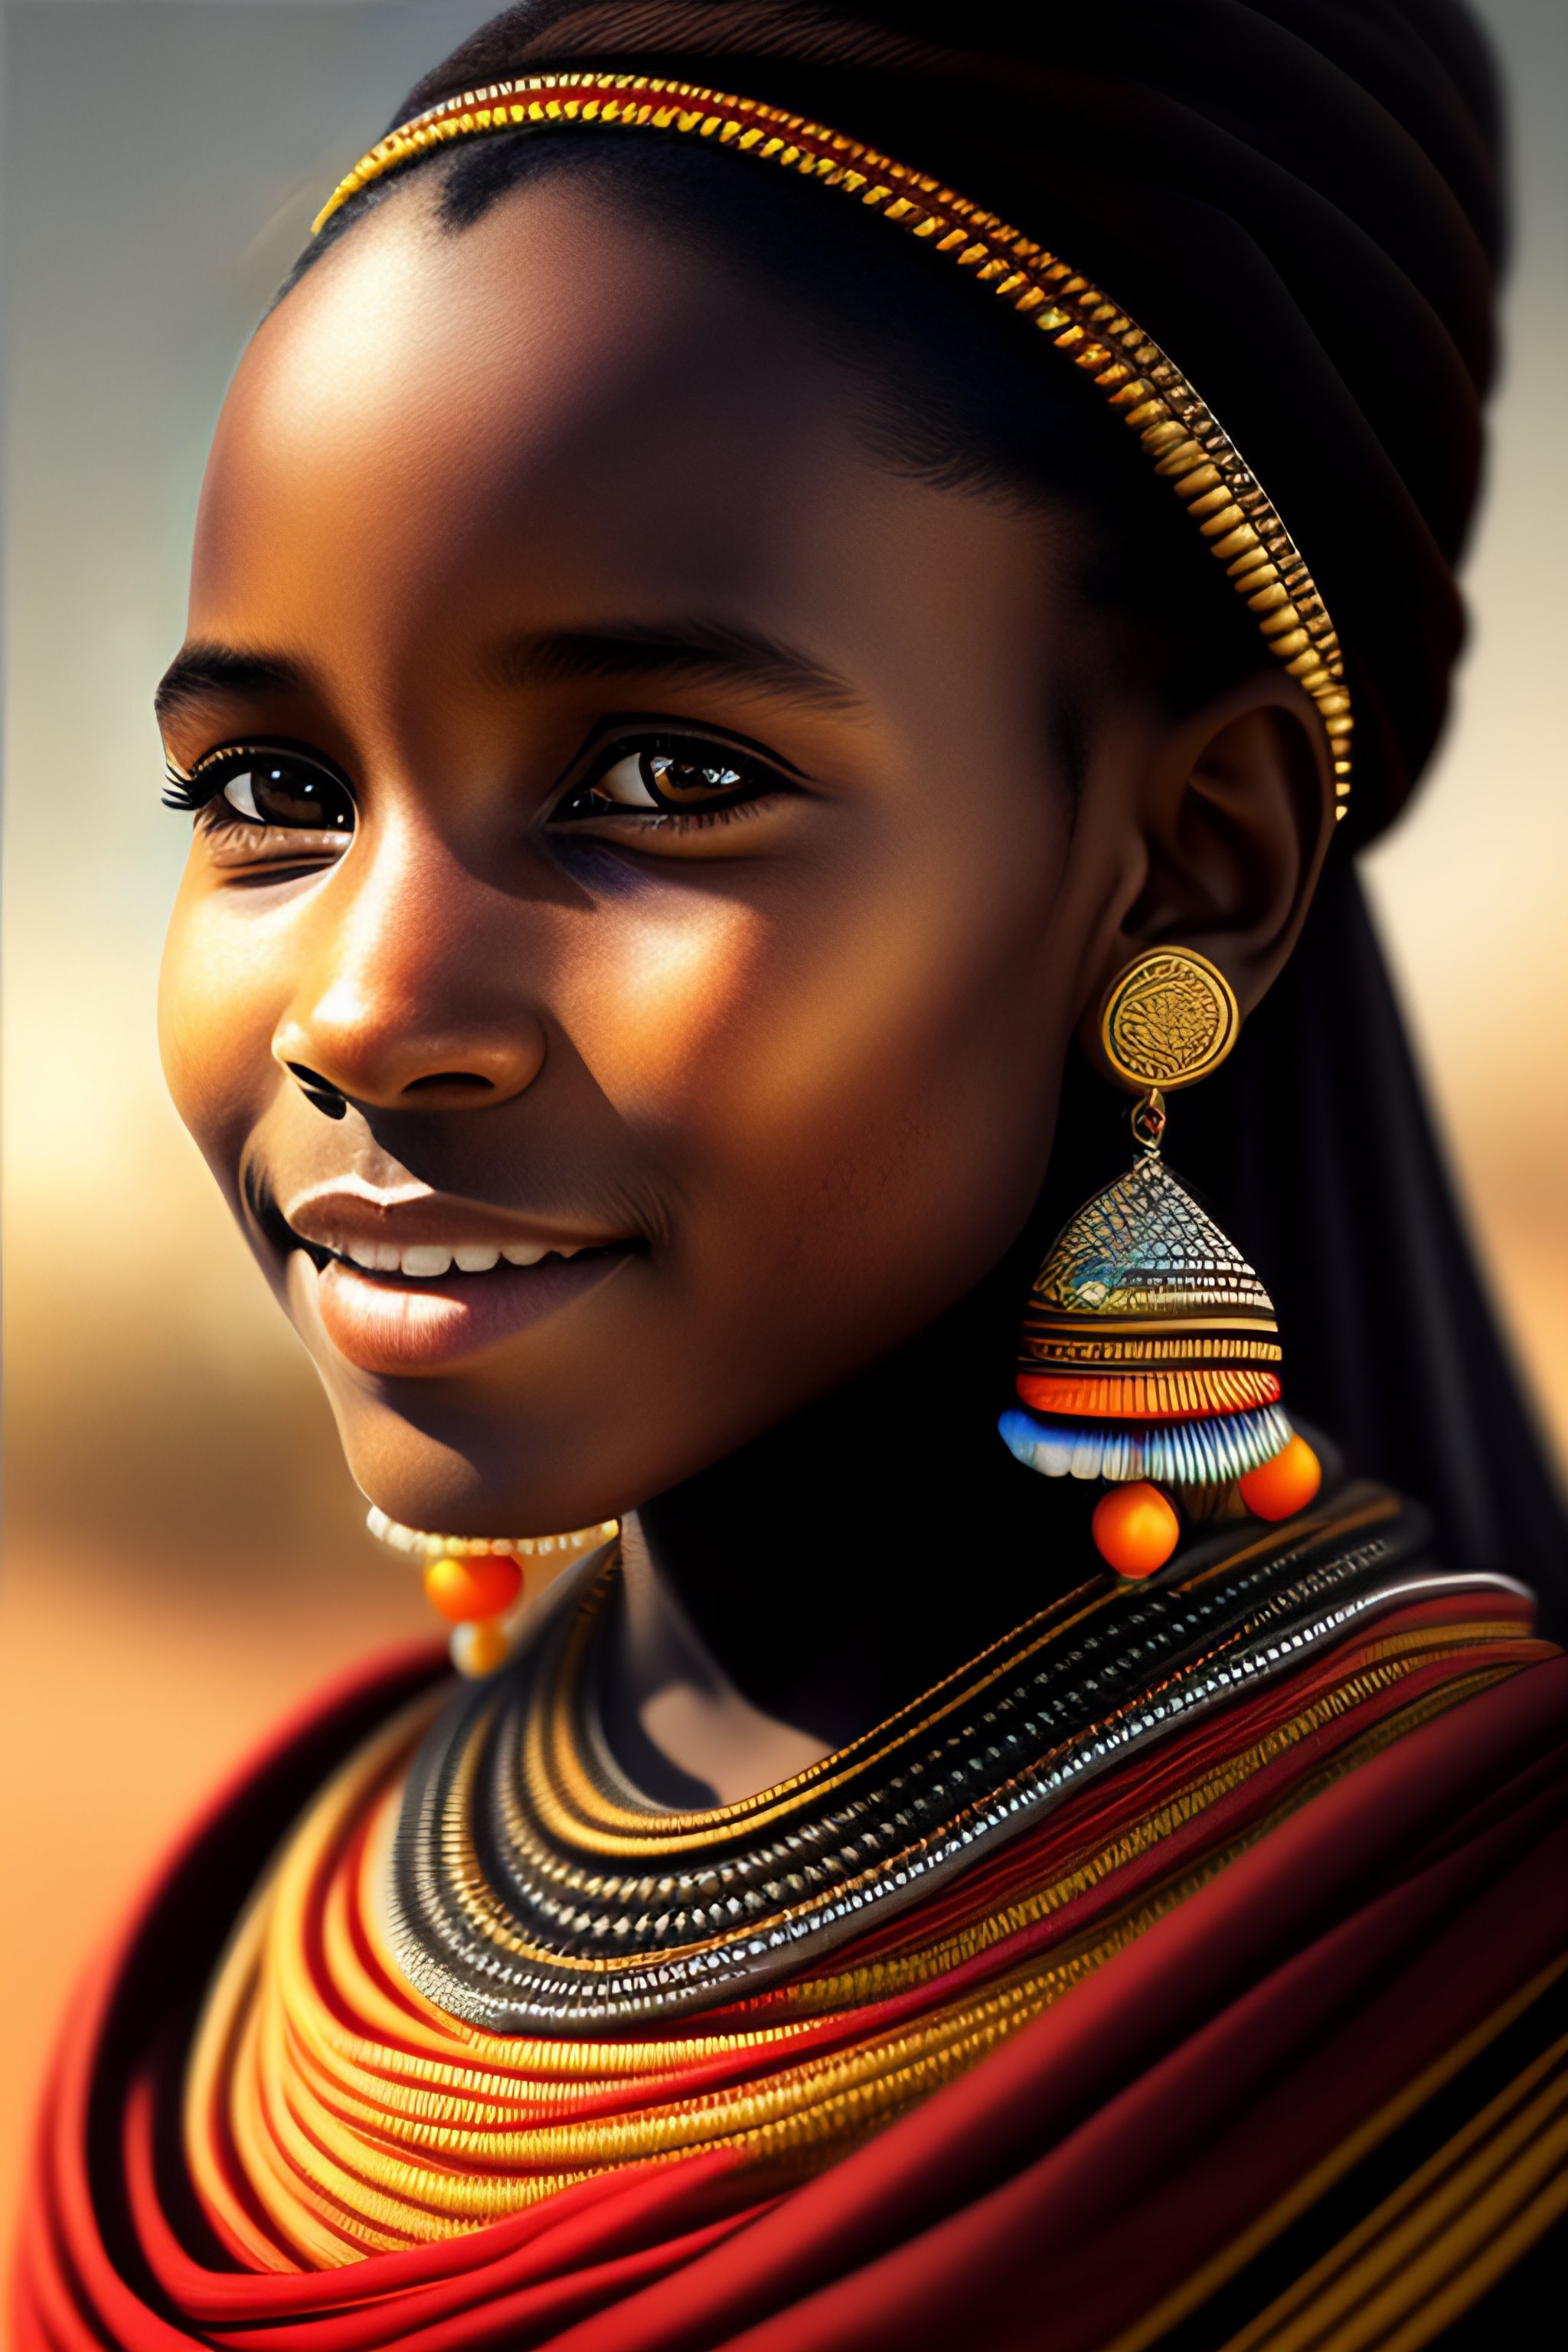 Lexica - Award winning digital sketch of a traditional maasai girl